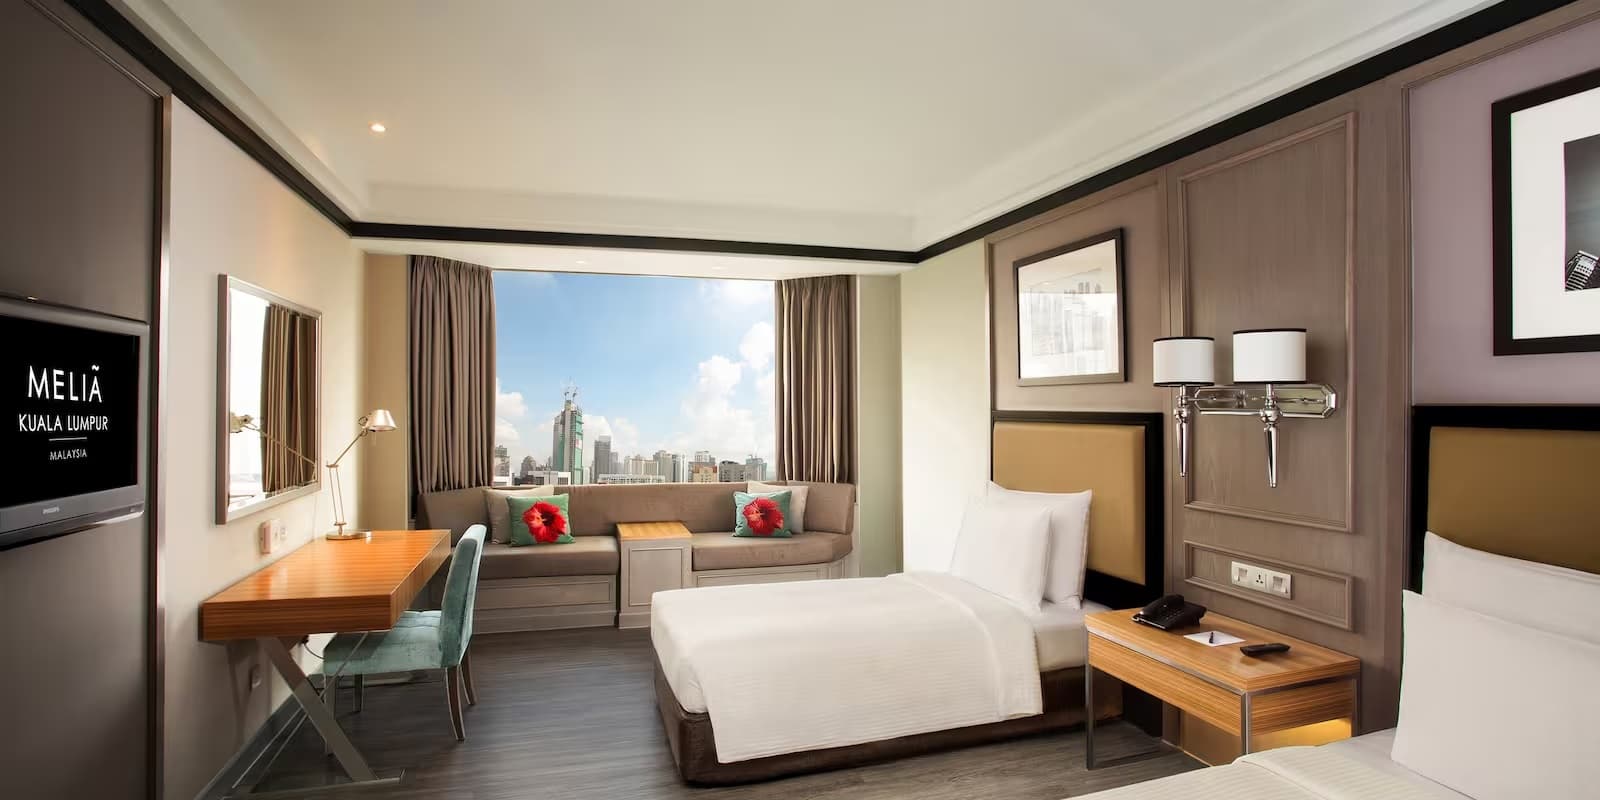 Melia Kuala Lumpur - Premium Guest Room